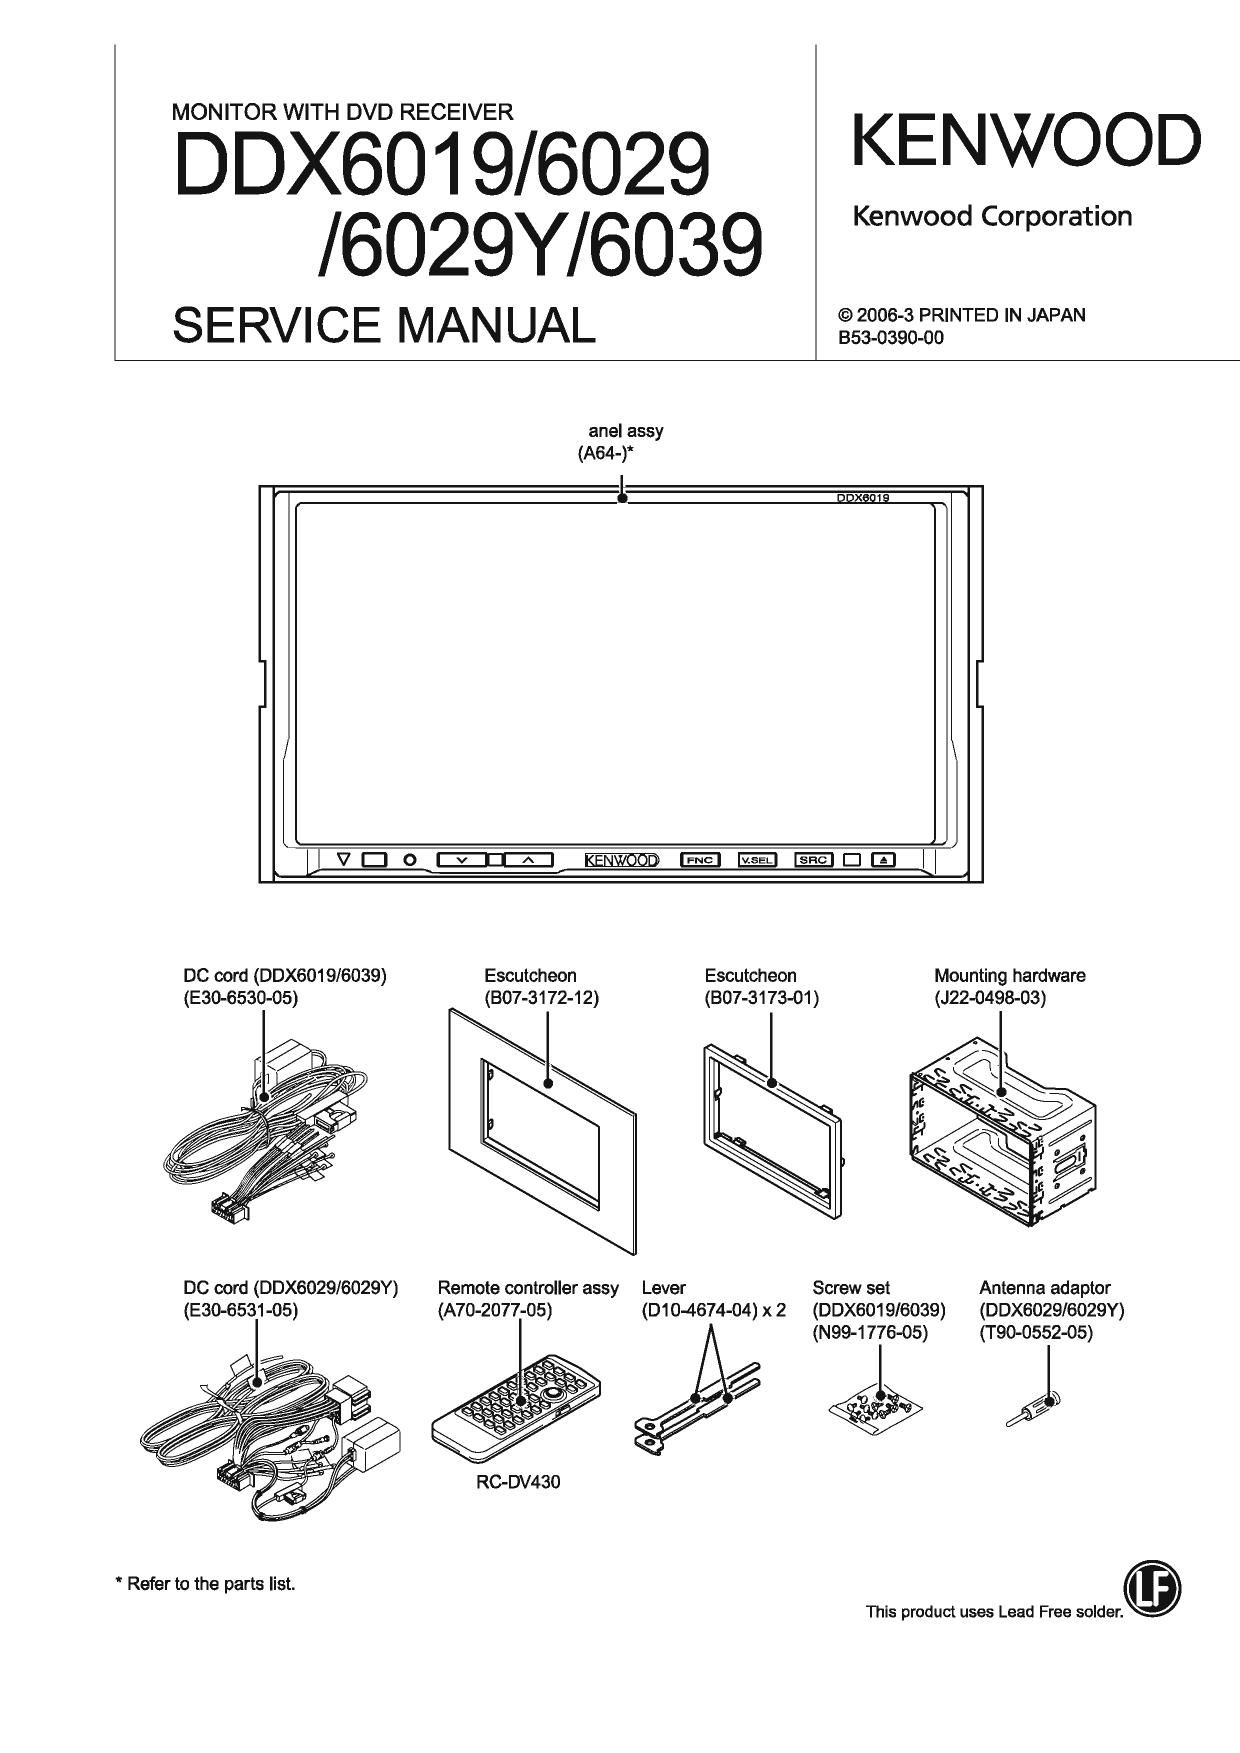 Kenwood DDX 6019 HU Service Manual